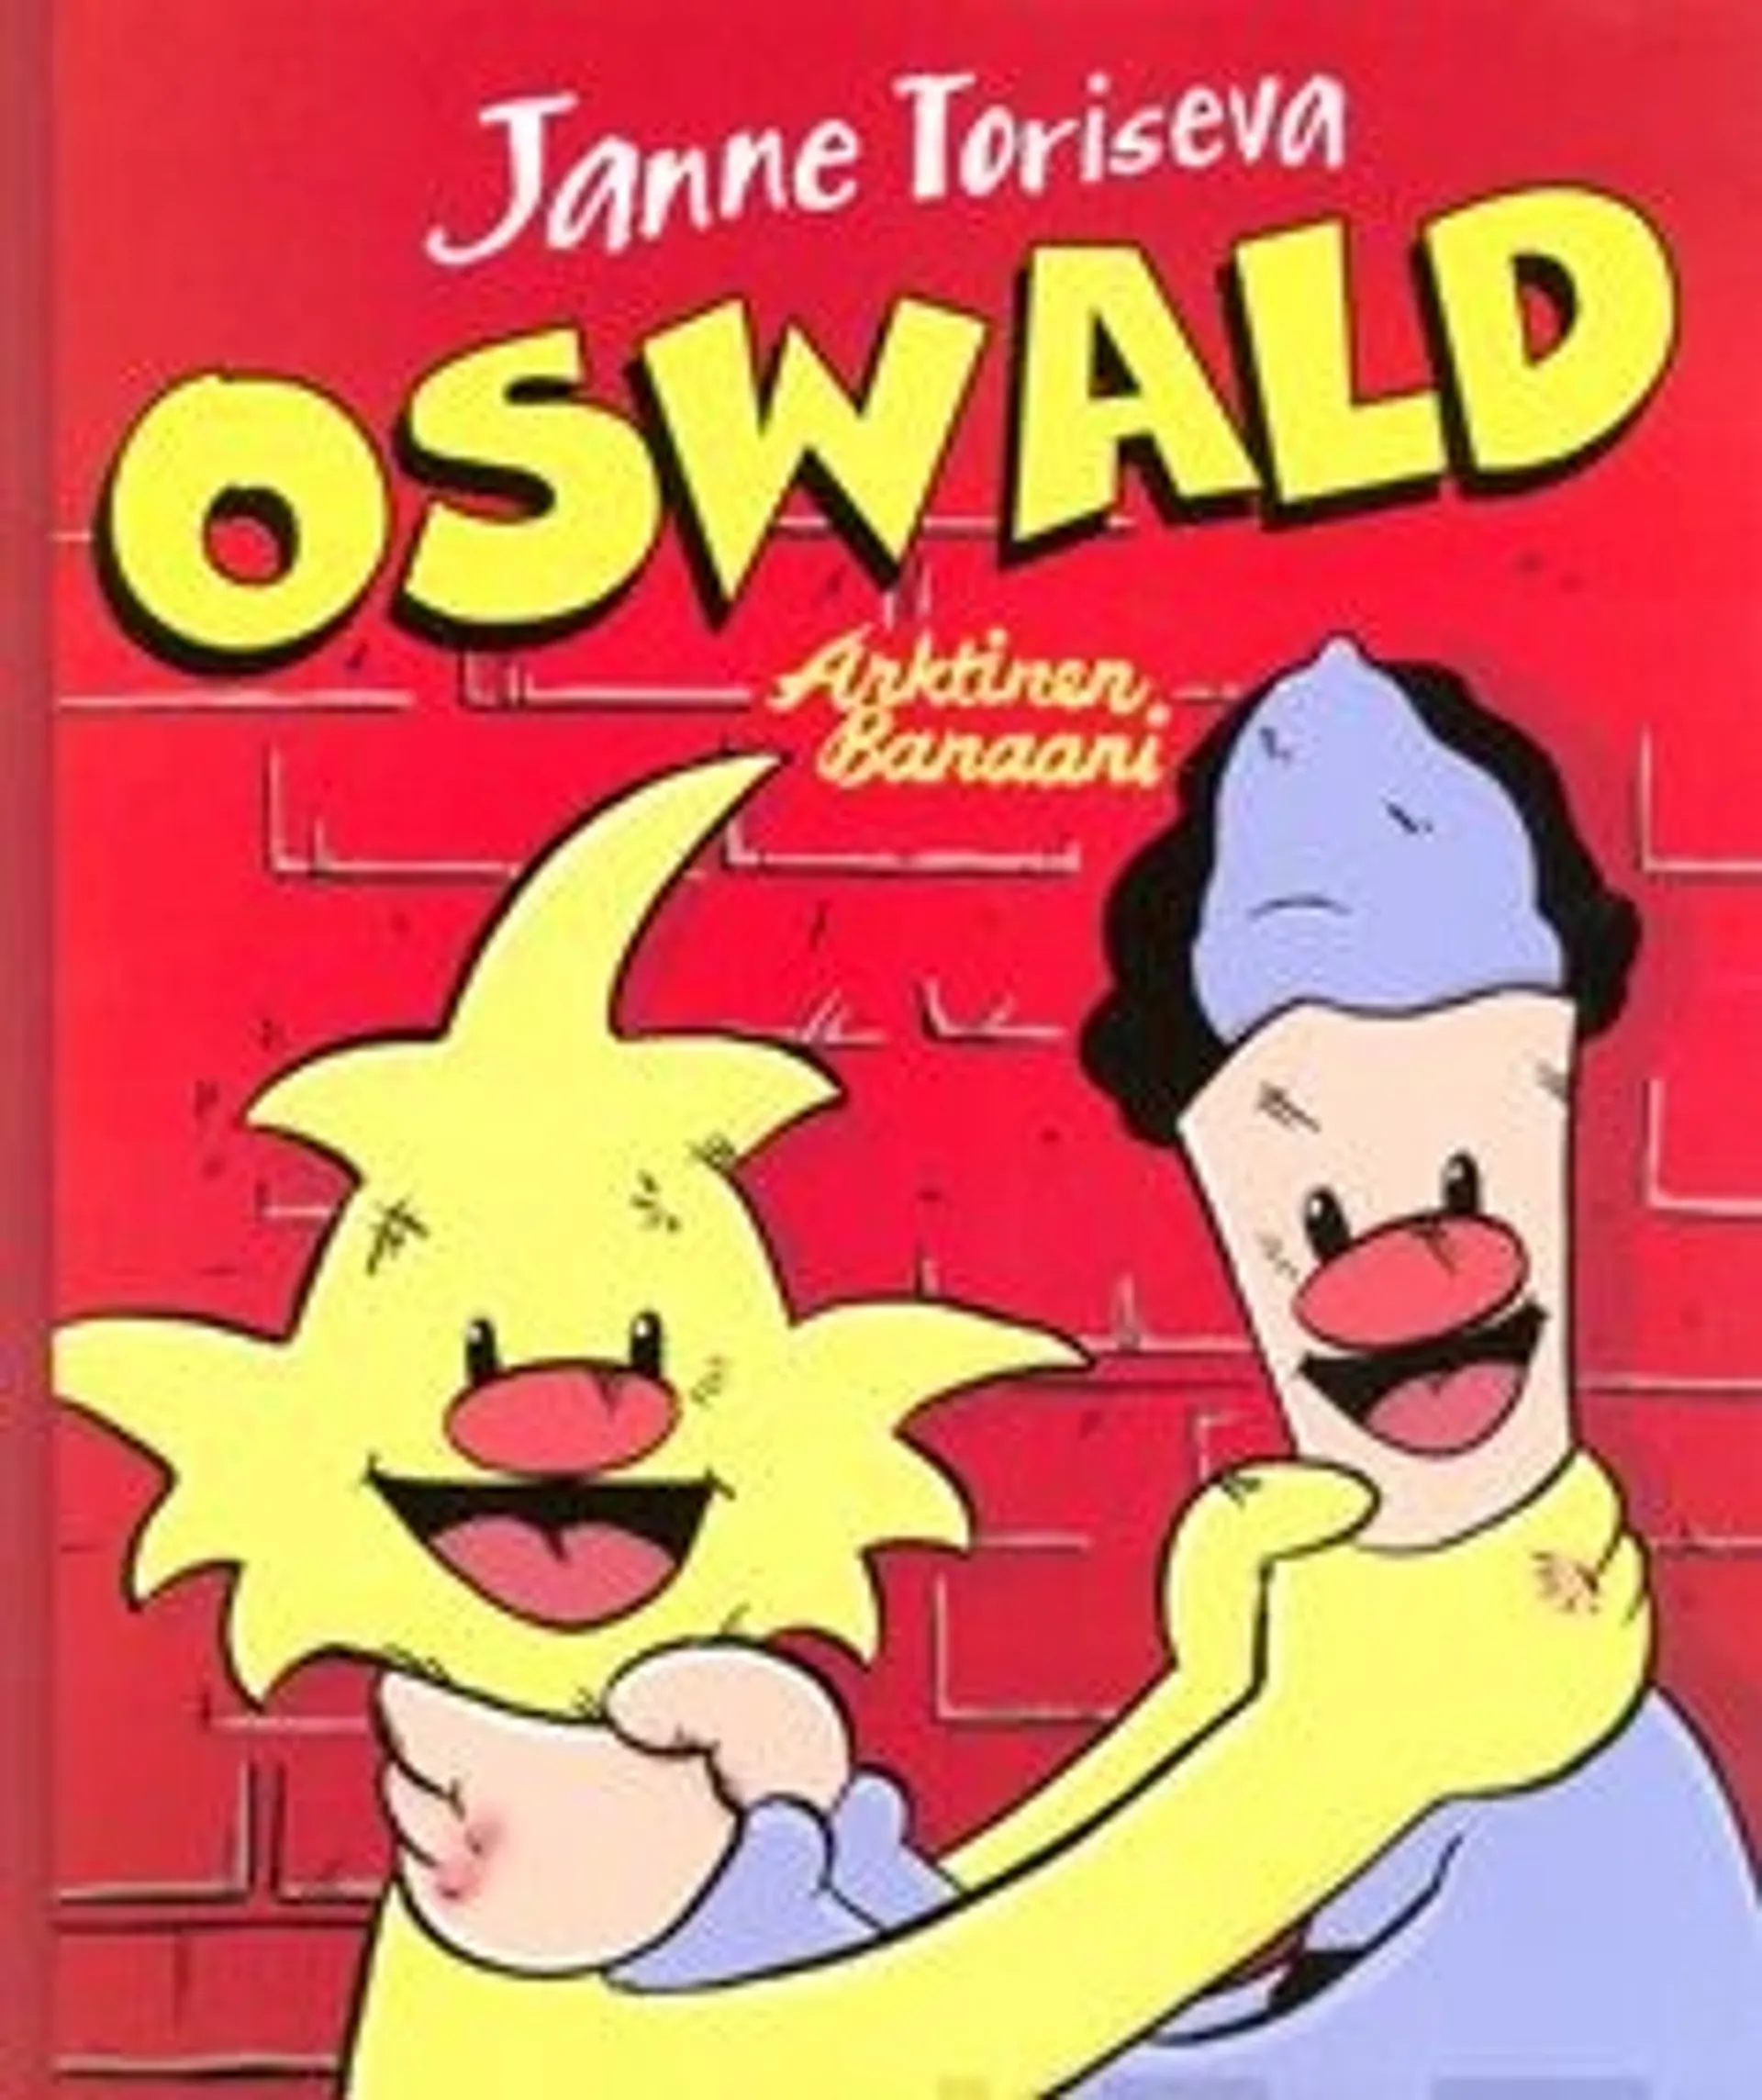 Toriseva, Oswald